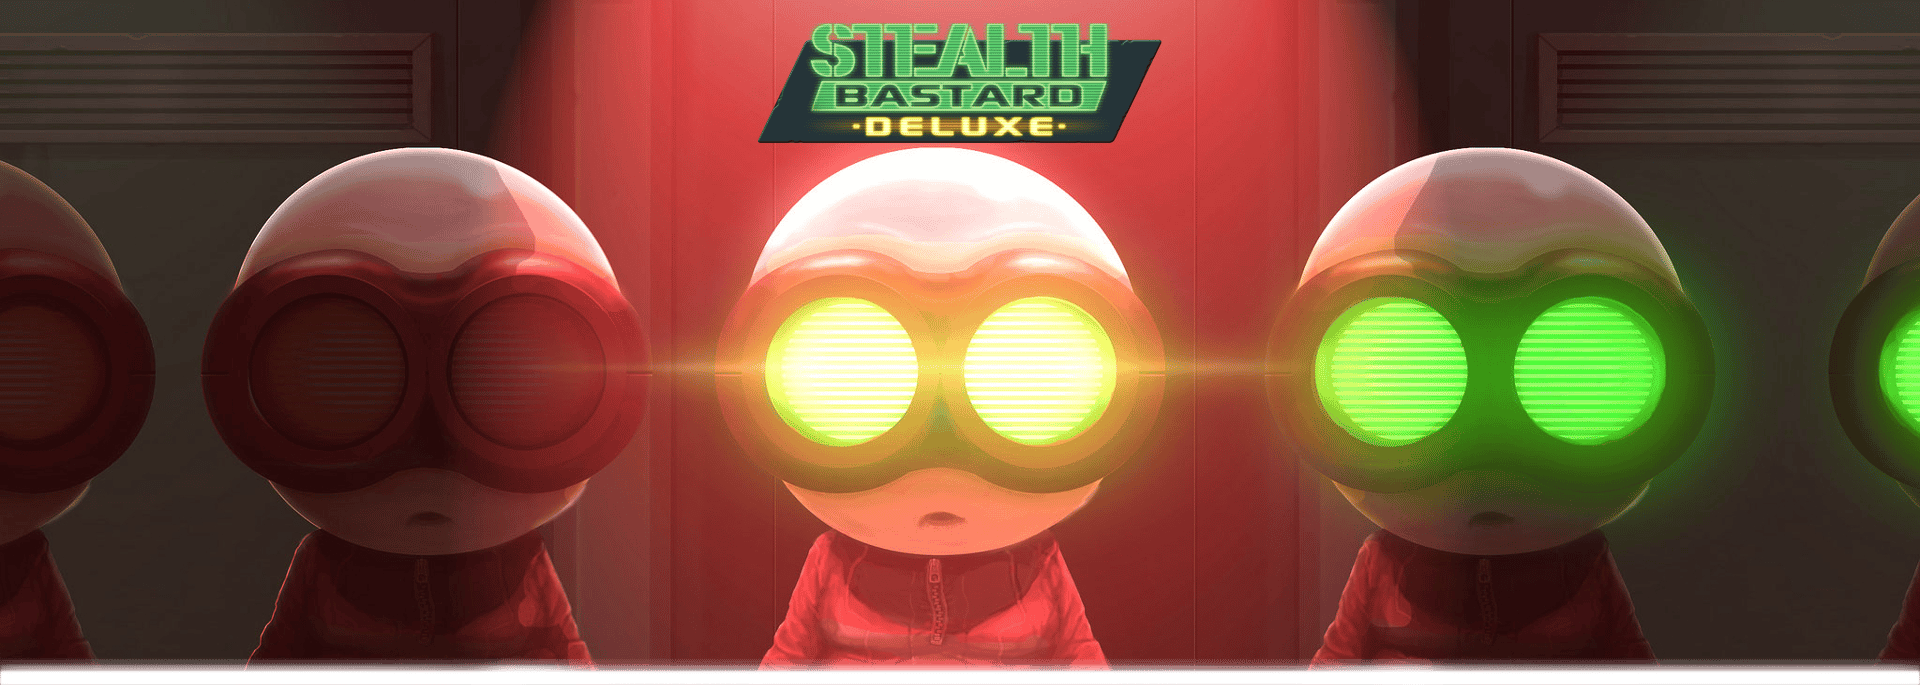 Stealth Bastard Deluxe Steam CD Key - background